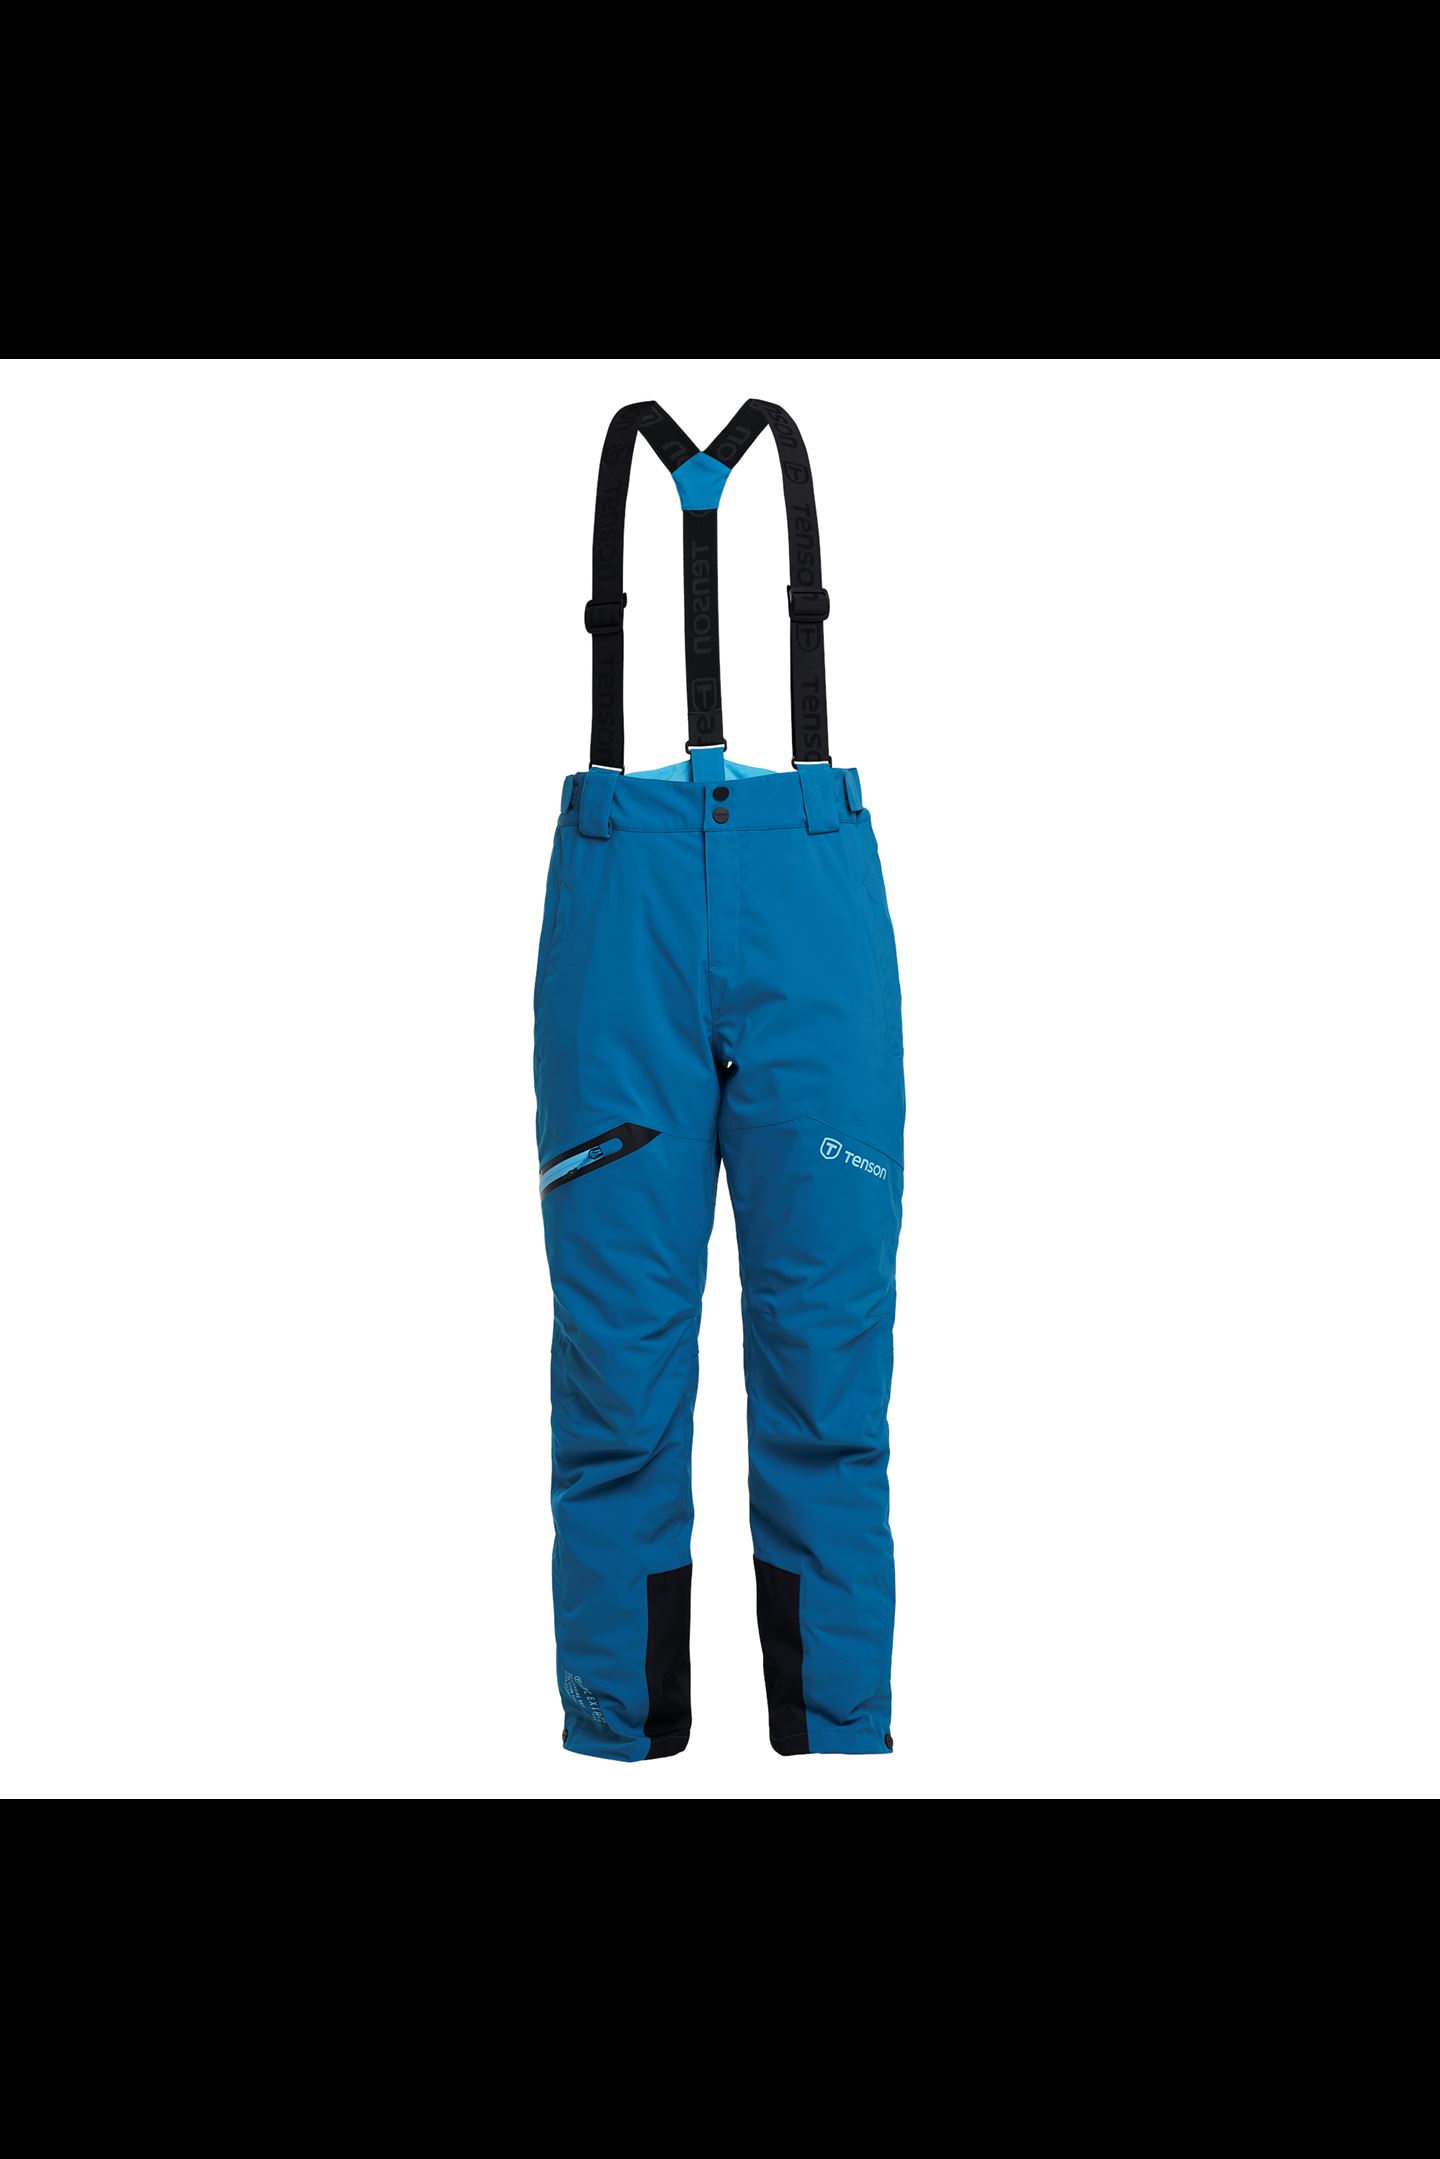 Core Ski Pants - Women's Ski Pants with Removable Braces - Turquoise